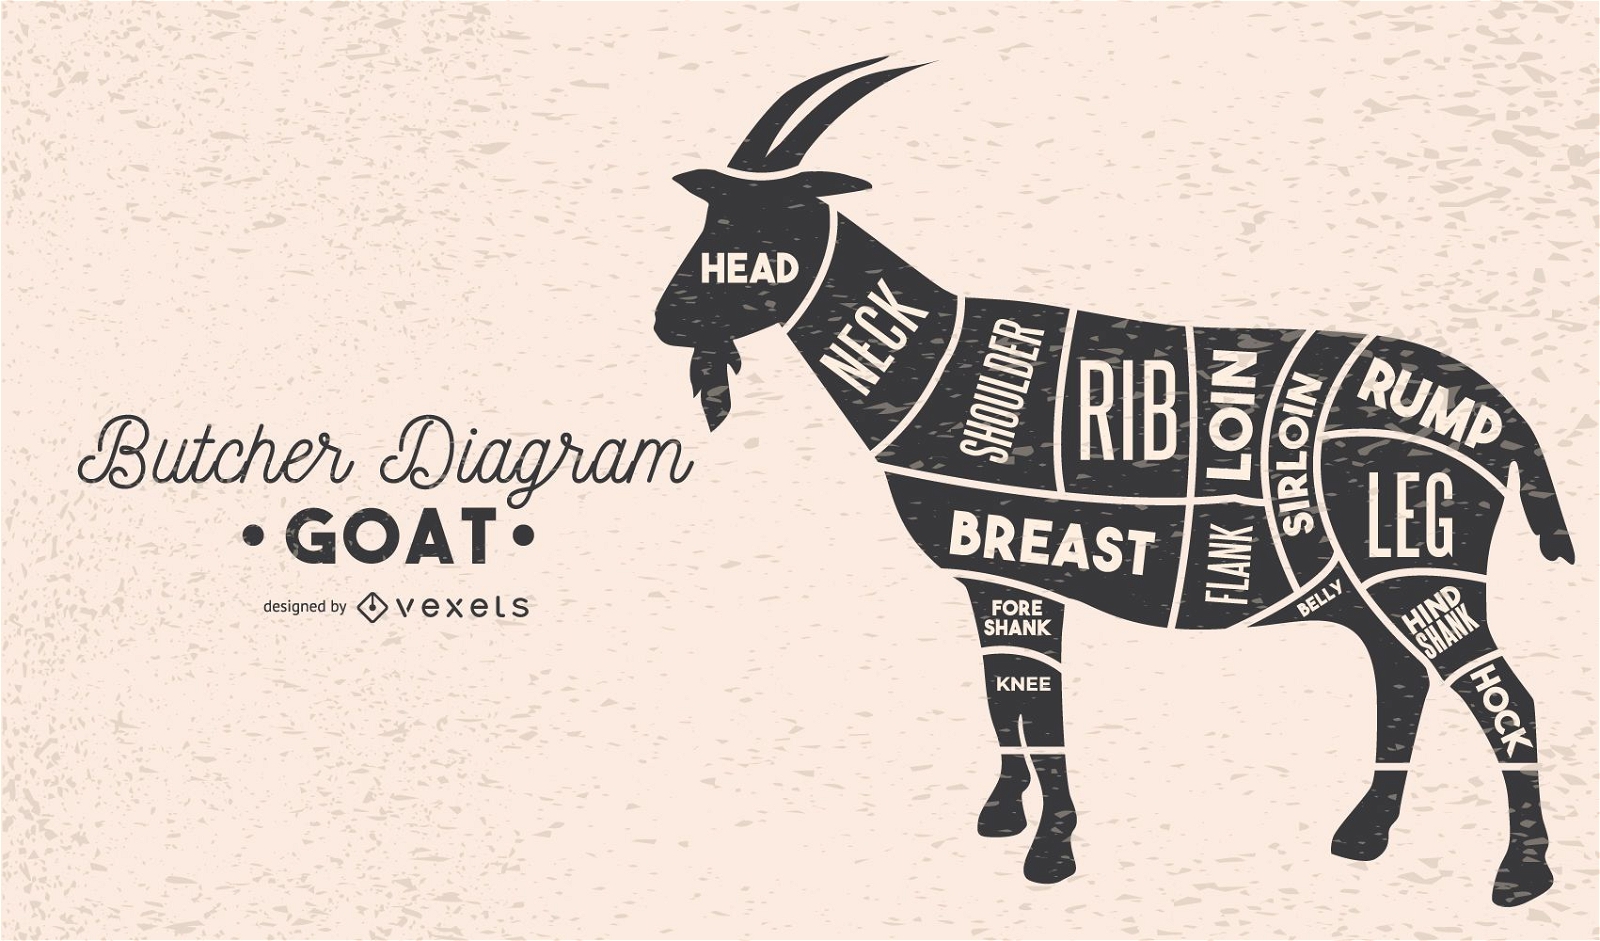 Goat Butcher Diagram